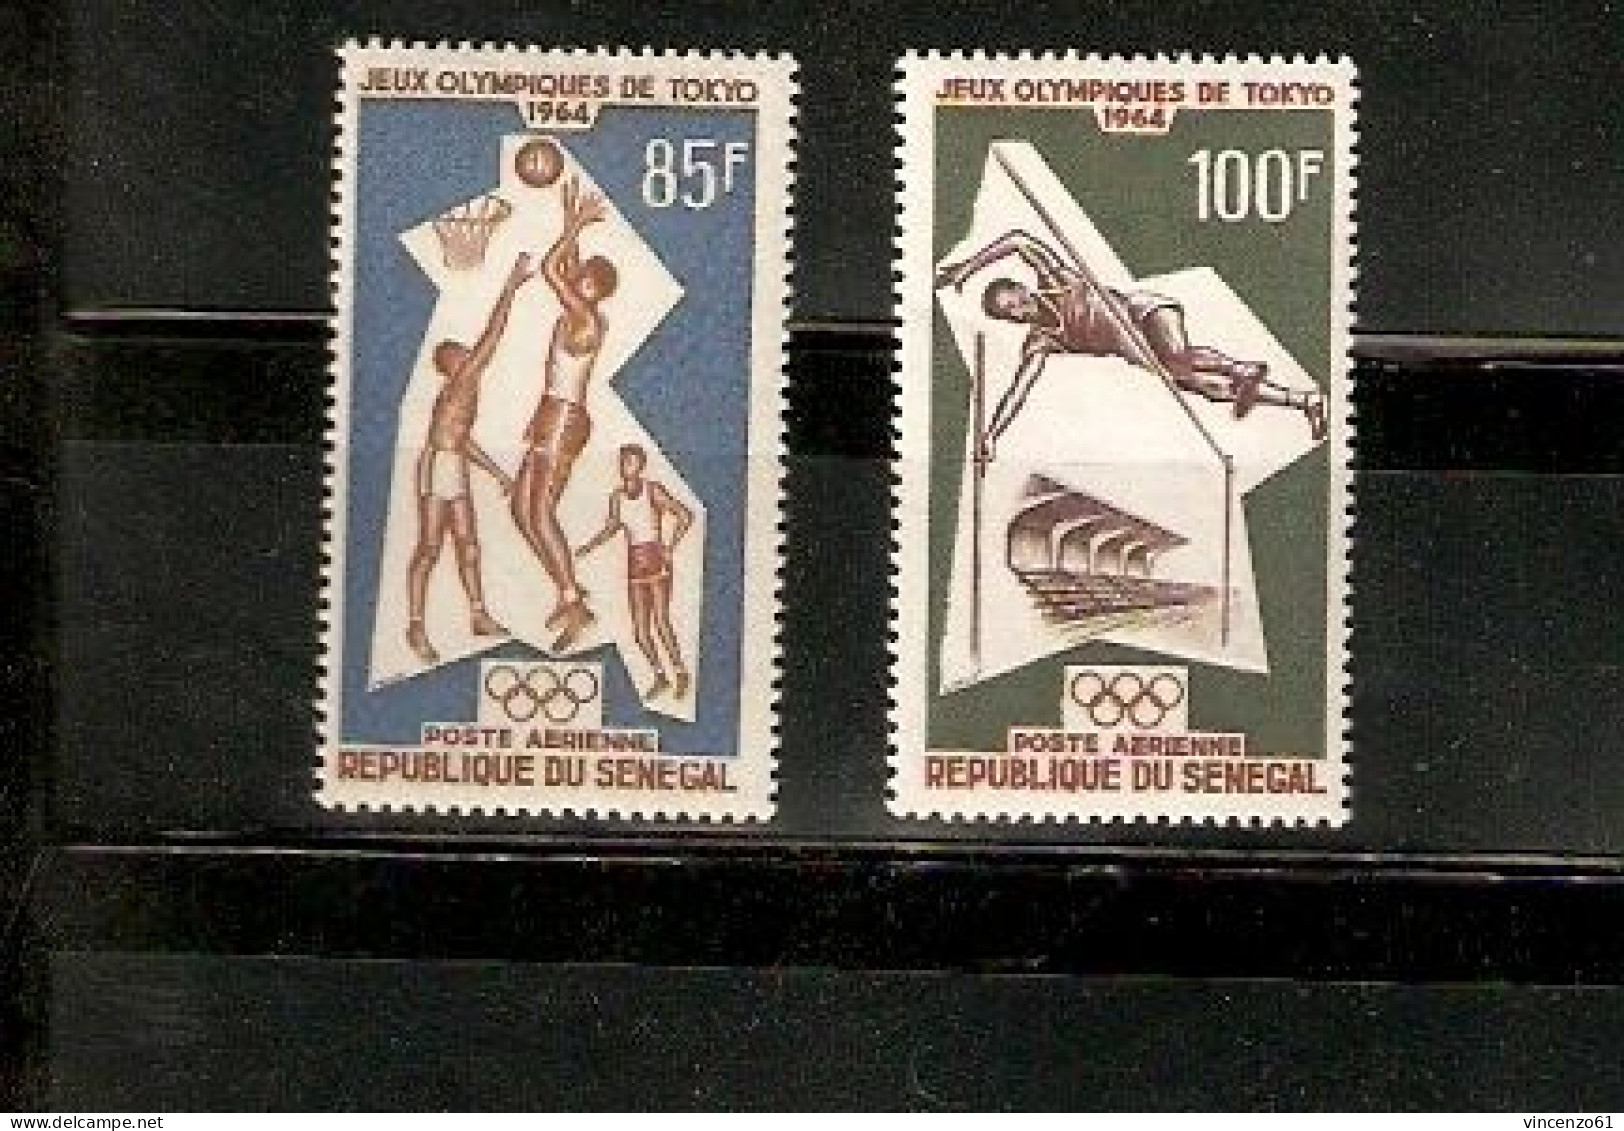 TOKYO OLIMPIC GAMES 1964 REPULIQUE DU SENEGAL - Ete 1964: Tokyo